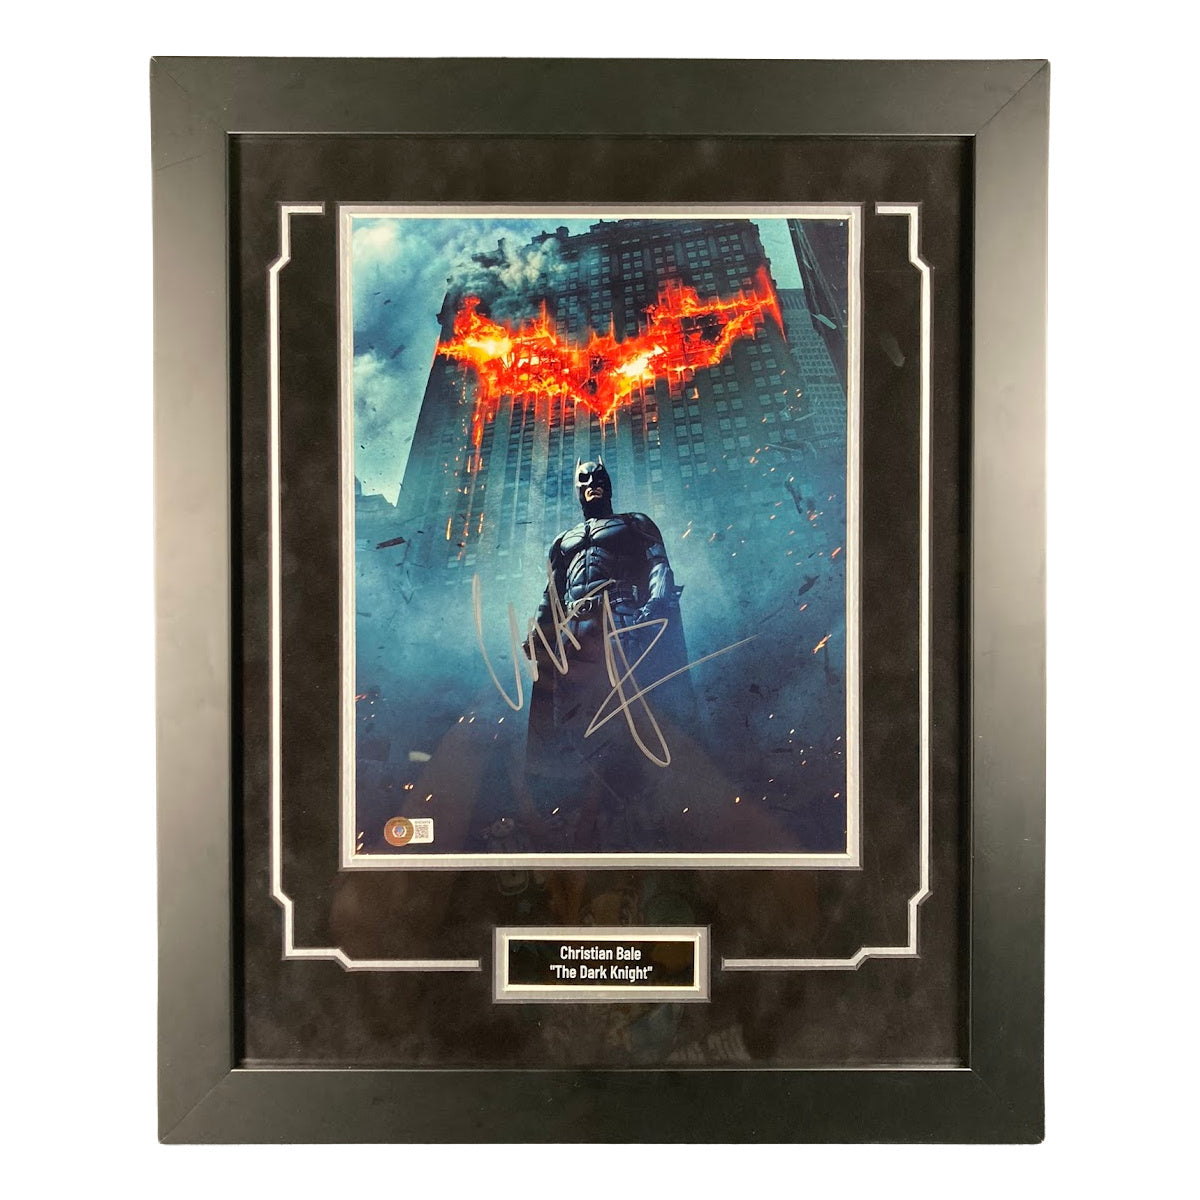 Christian Bale Signed Autograph 11x14 Photo The Dark Knight Batman FRAMED BAS COA